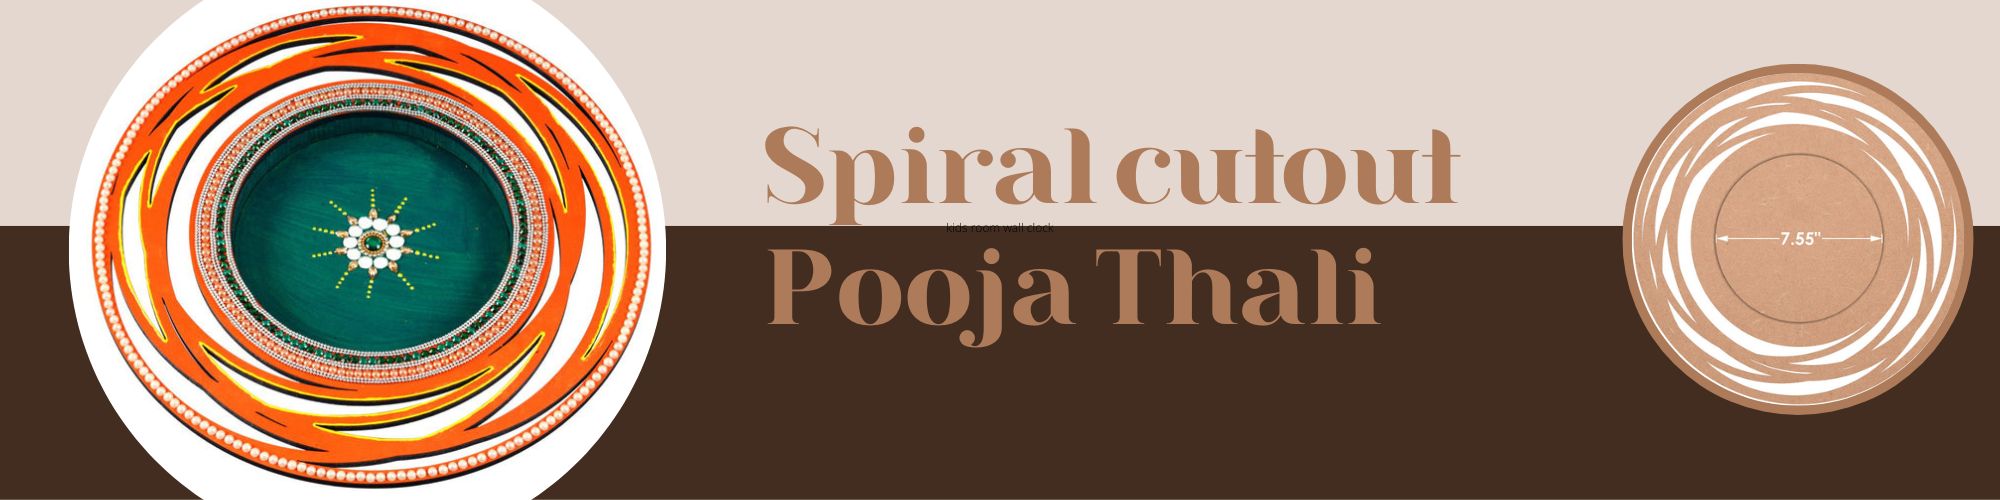 Spiral cutout Pooja Thali